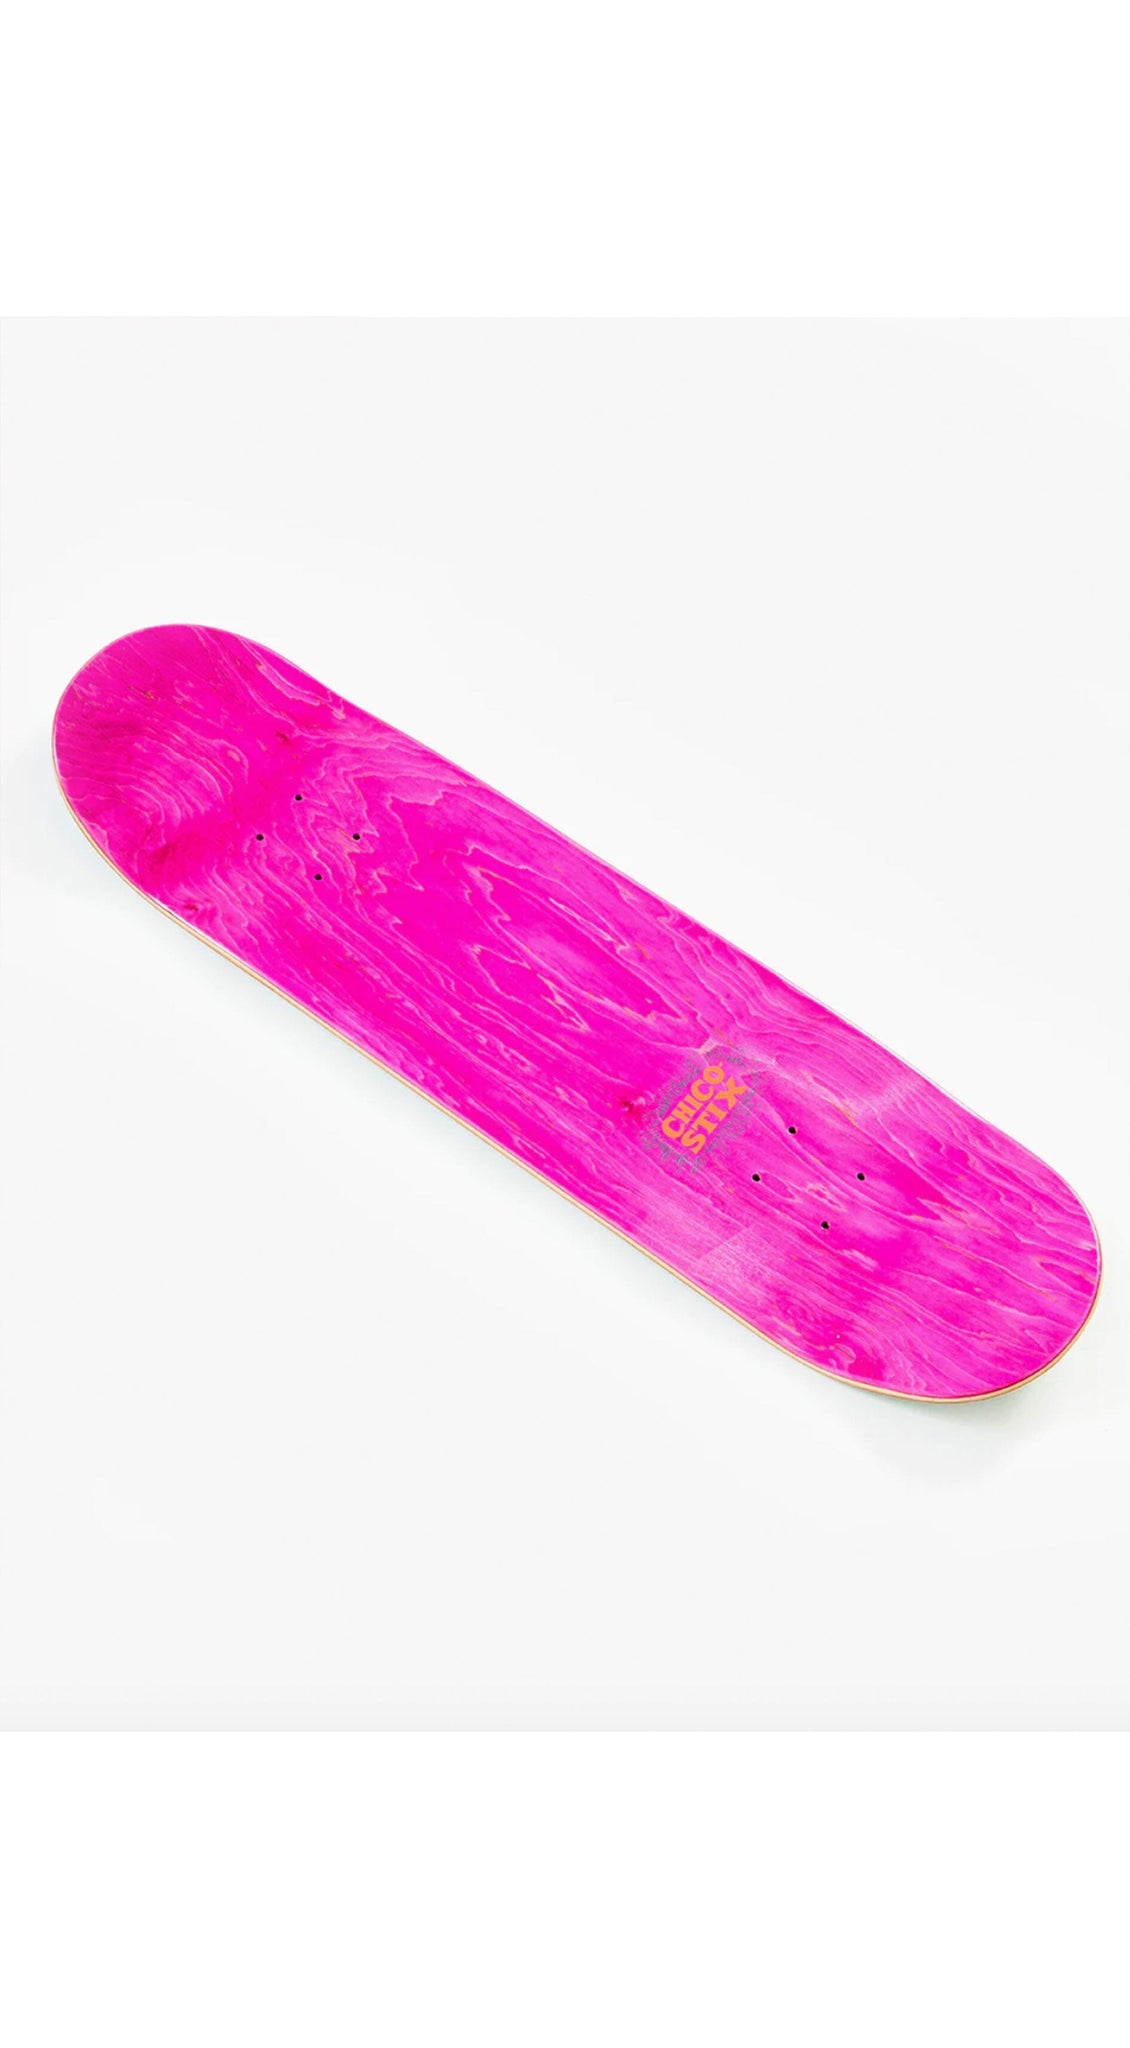 CHICO STIX 2x4 Assorted 8.5 Skateboard Deck -Tabla Tabla/Deck CHICO STIX 